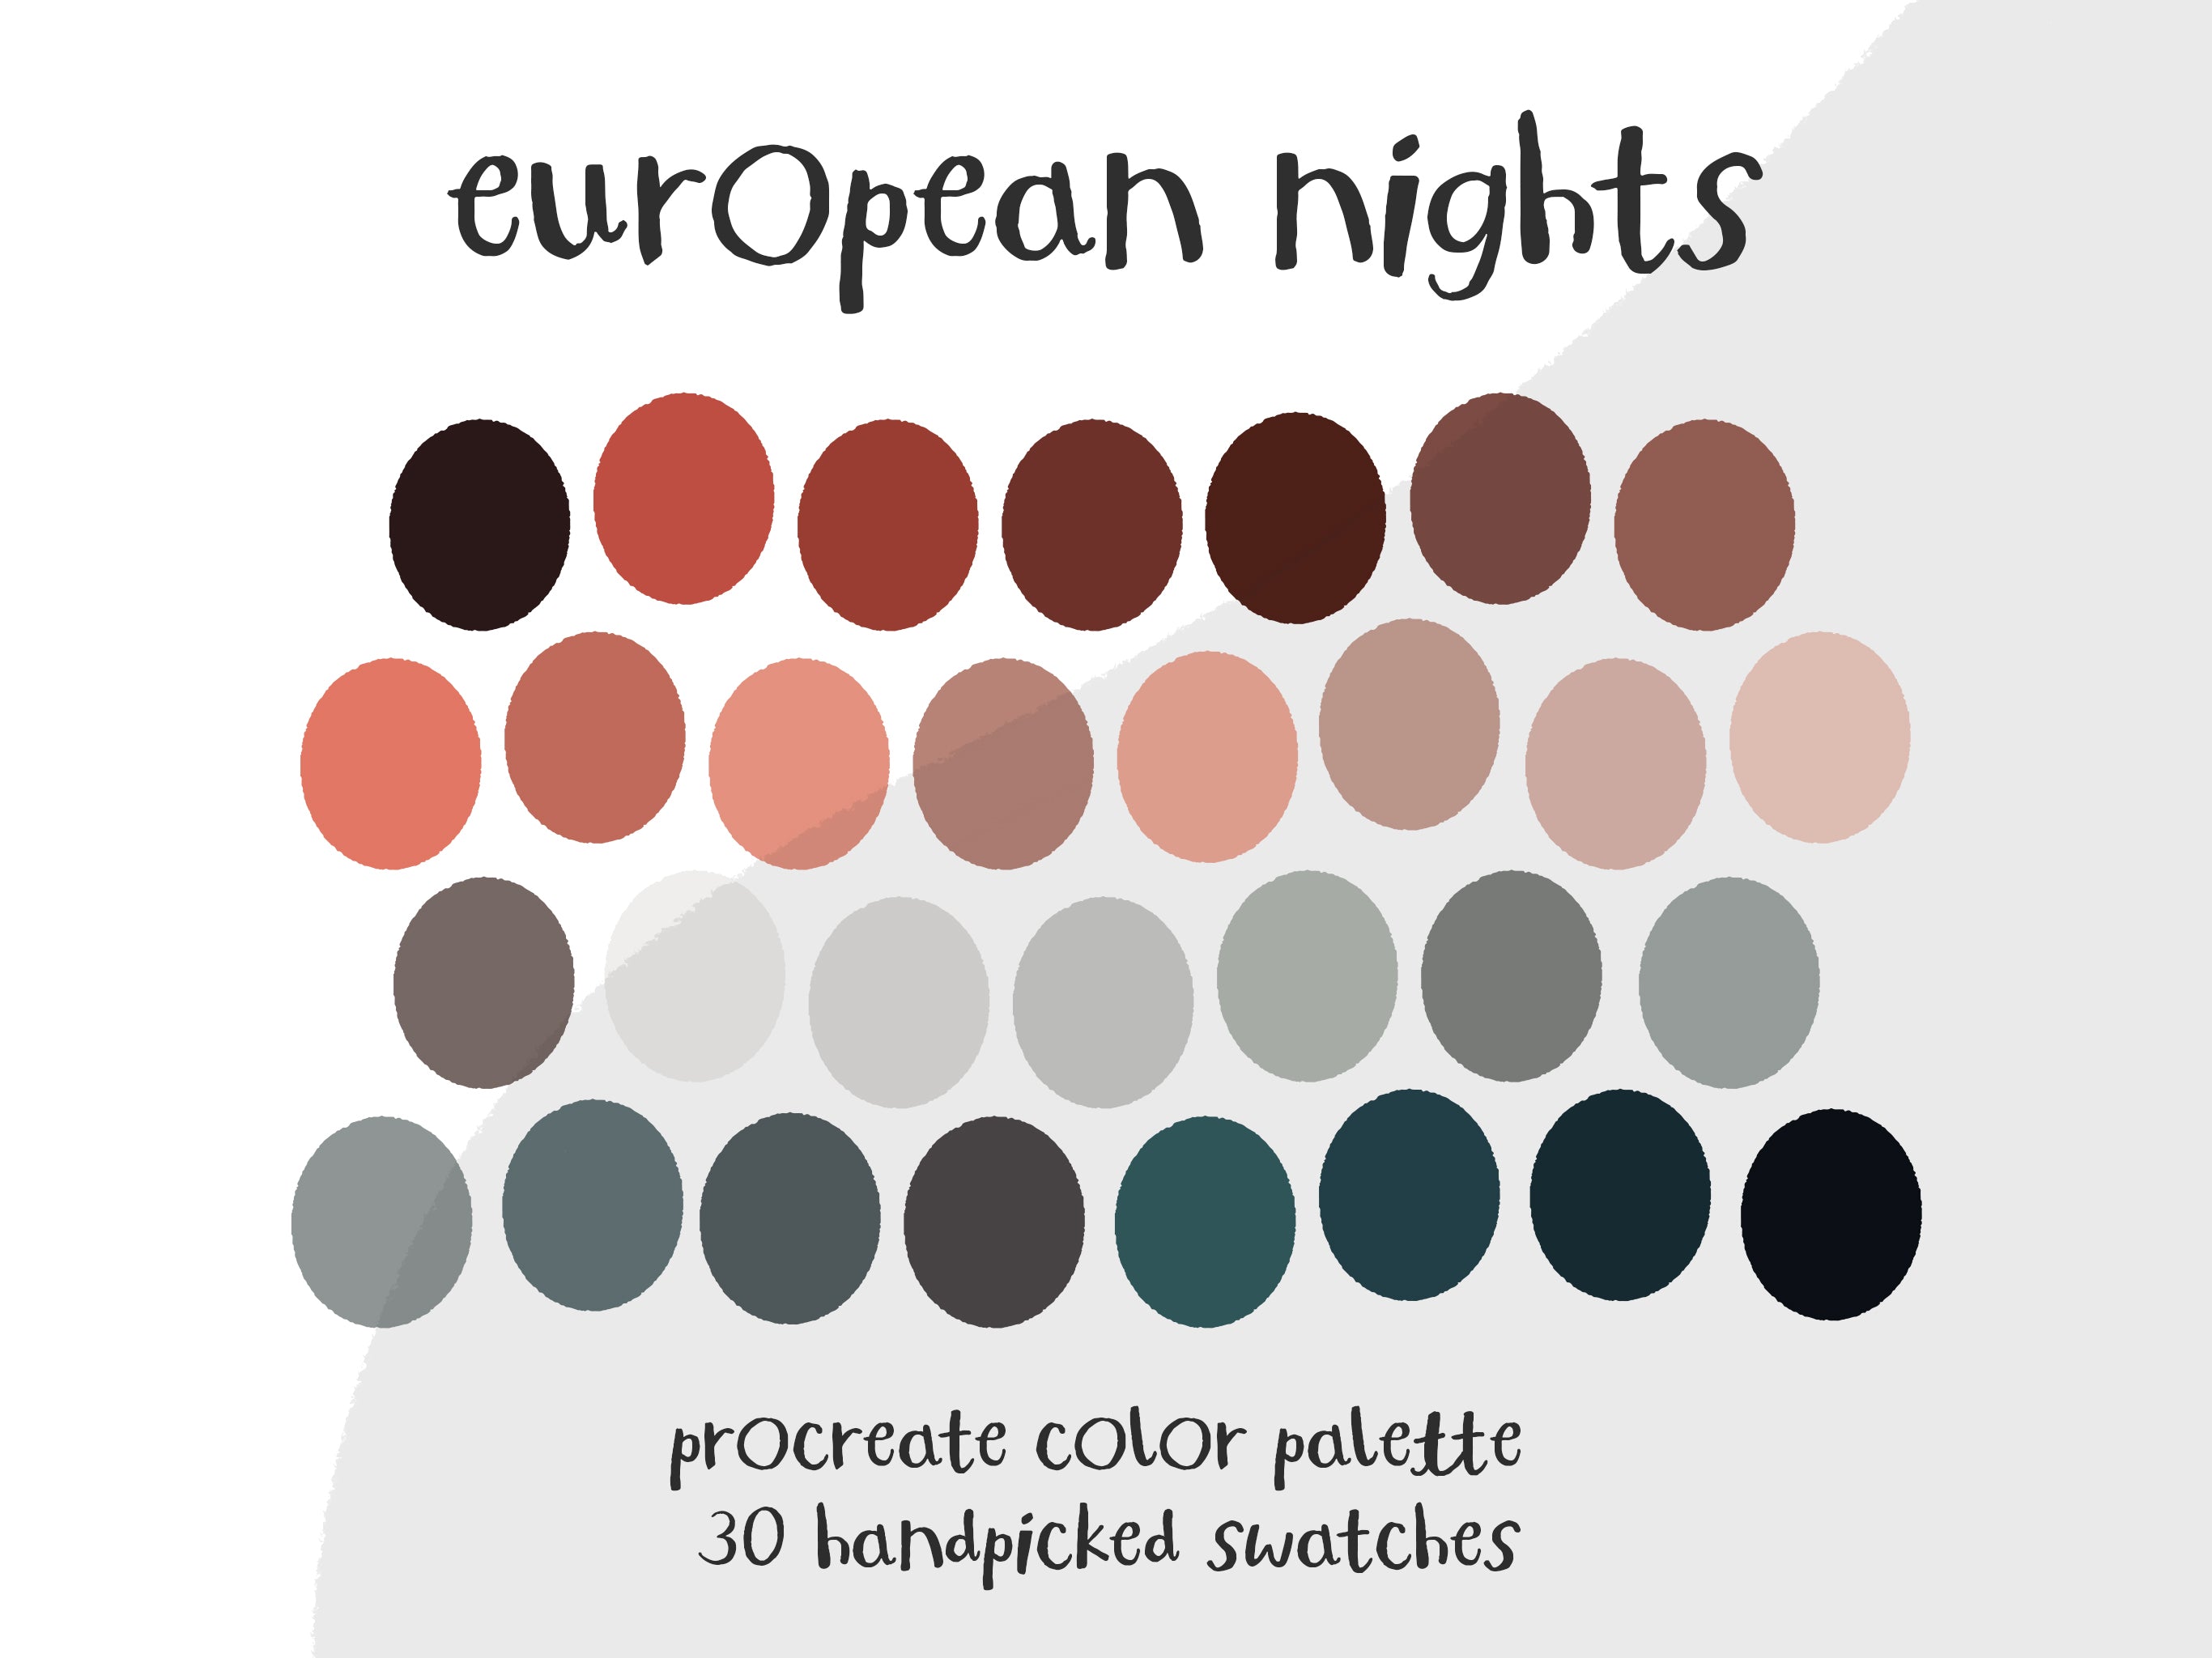 European Nights